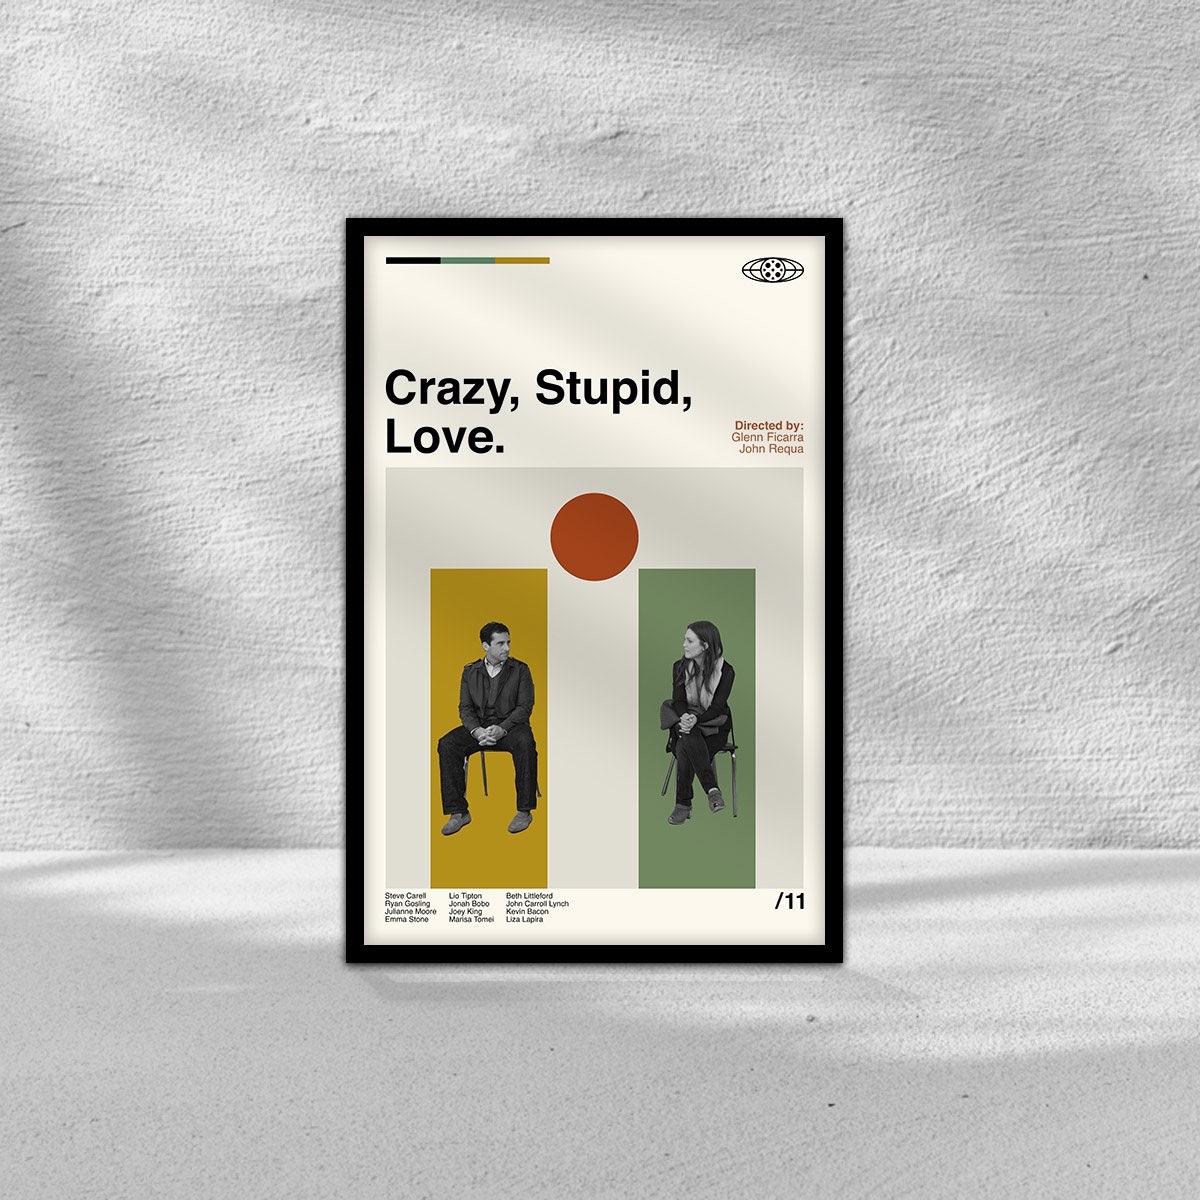  Crazy, Stupid, Love [Blu-ray] : Steve Carell, Julianne